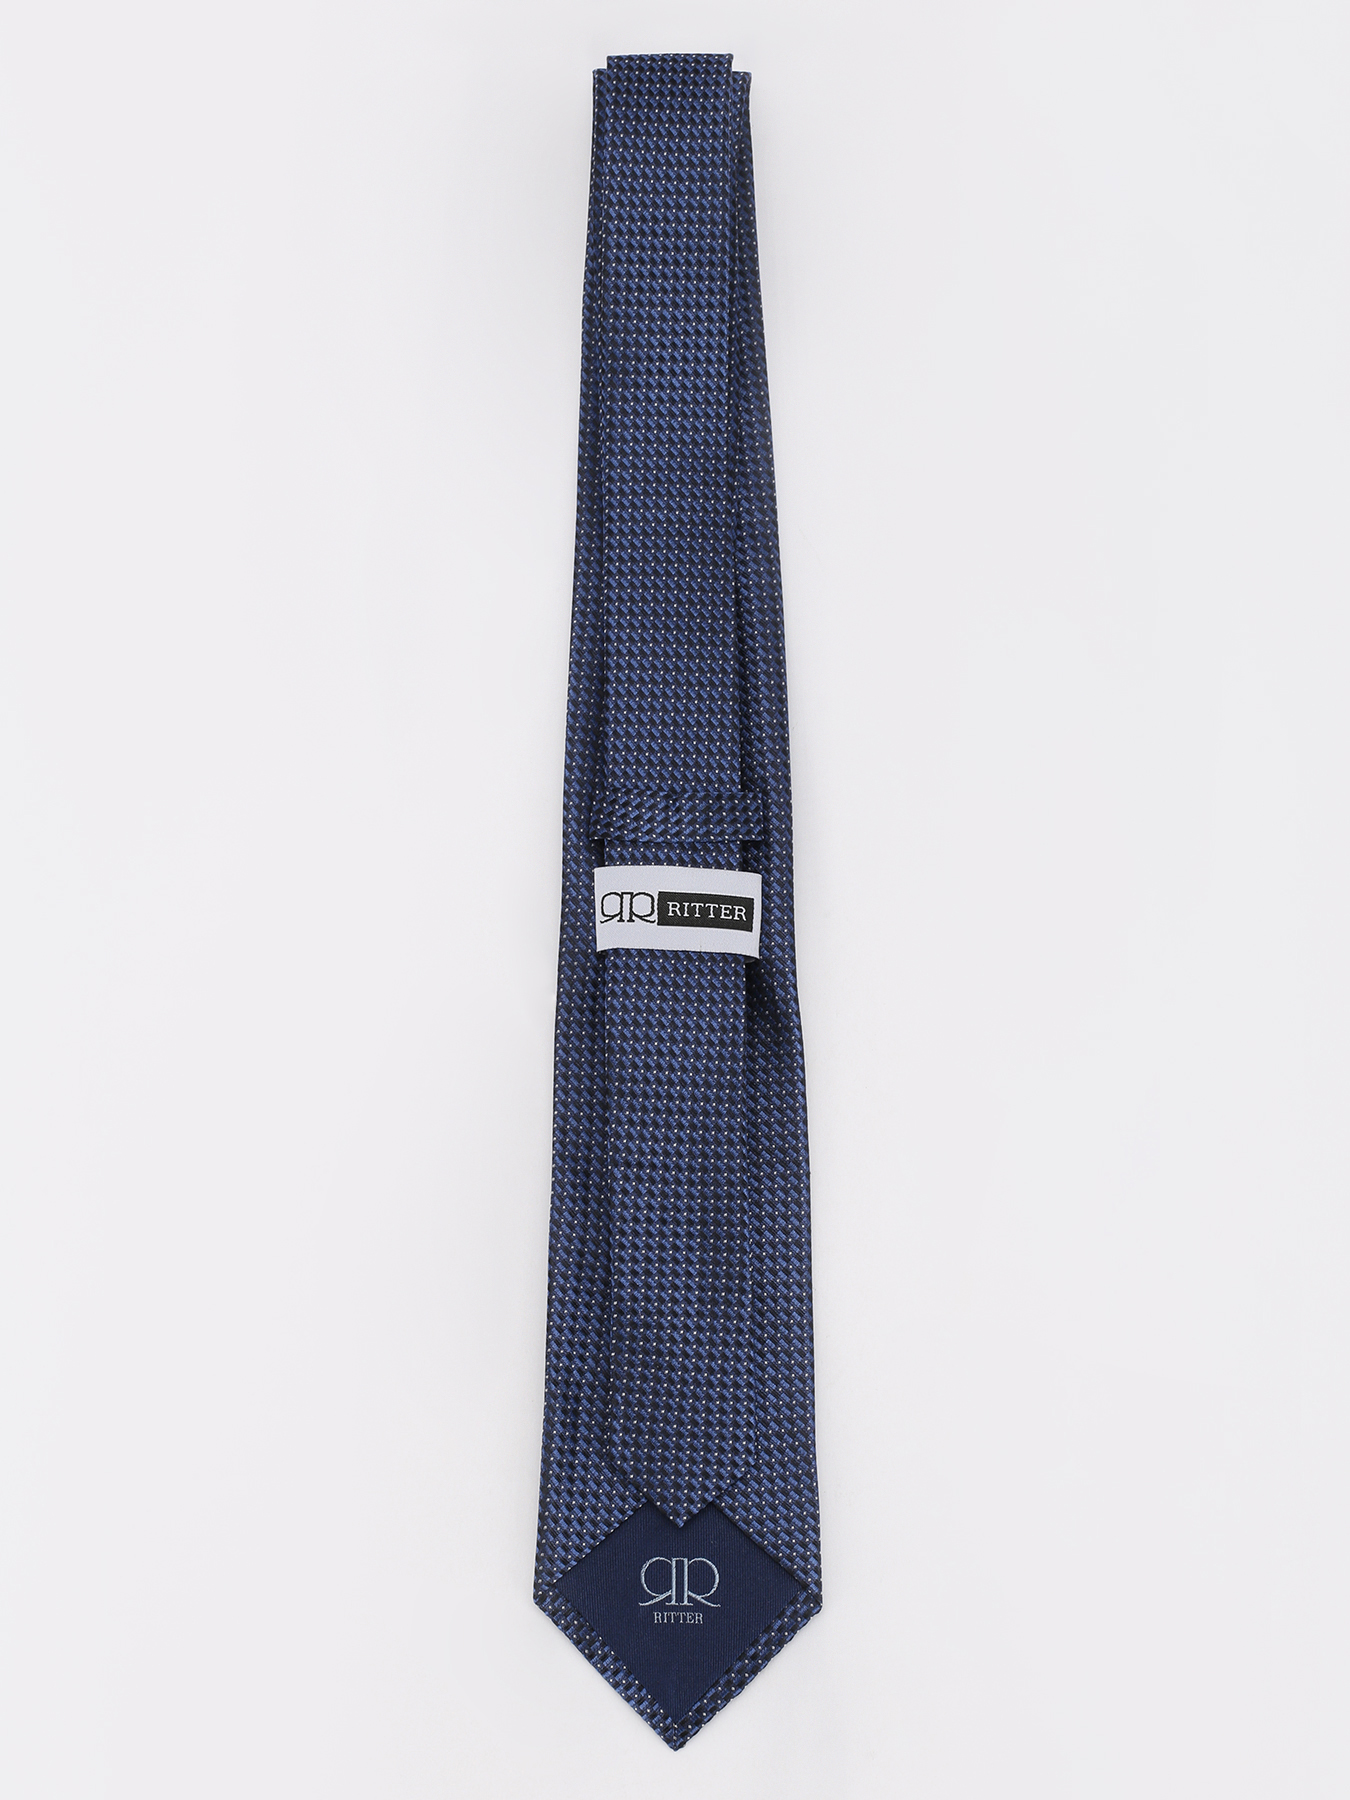 Ritter Шелковый галстук с узорами 323008-185 Фото 2